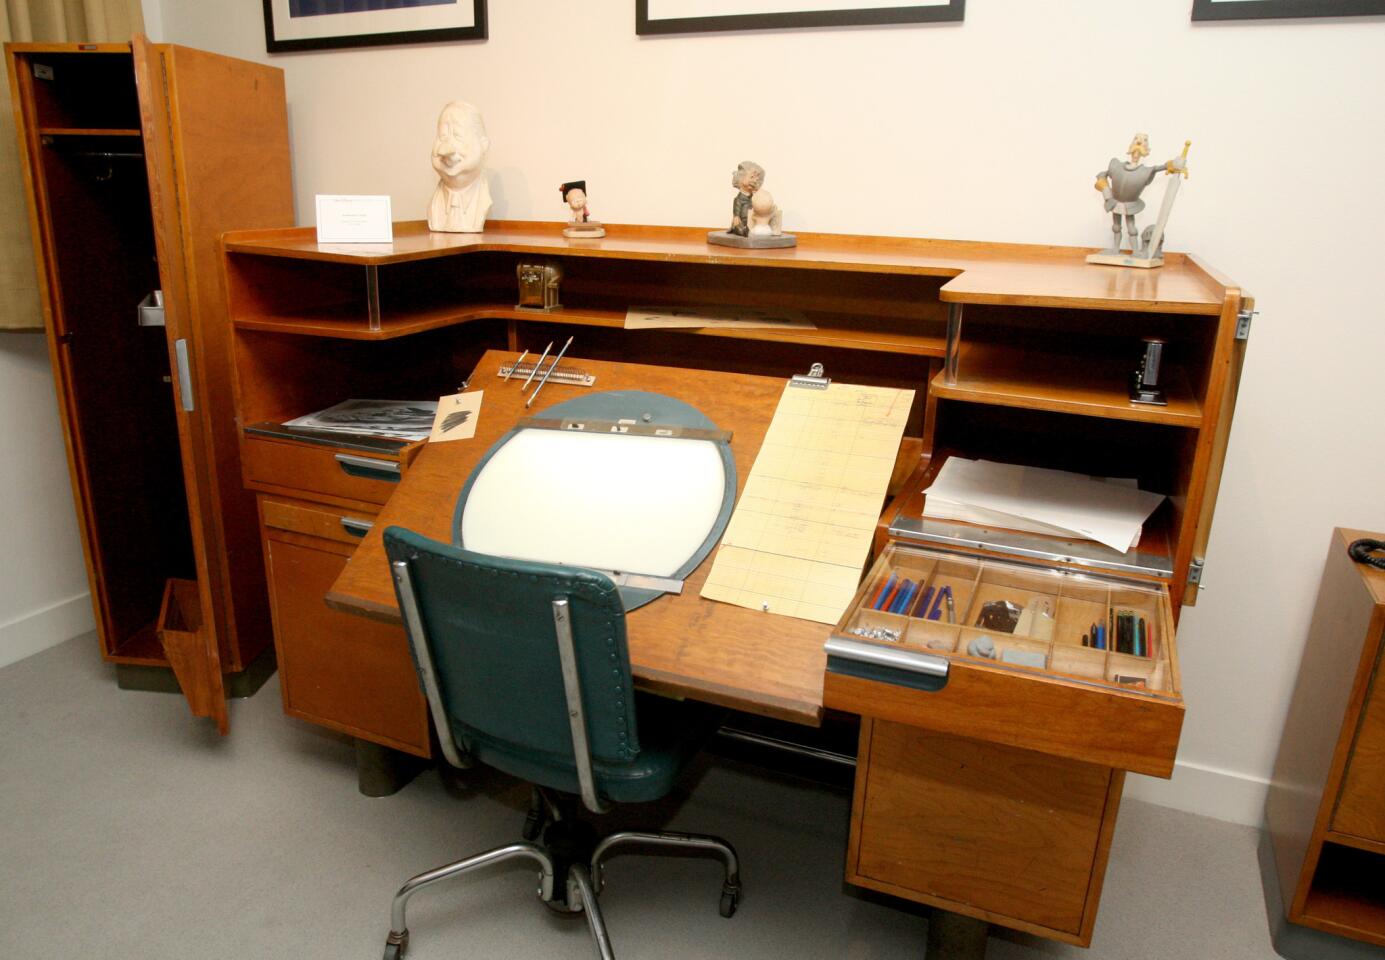 Photo Gallery: Walt Disney's office restored at the Burbank studio location